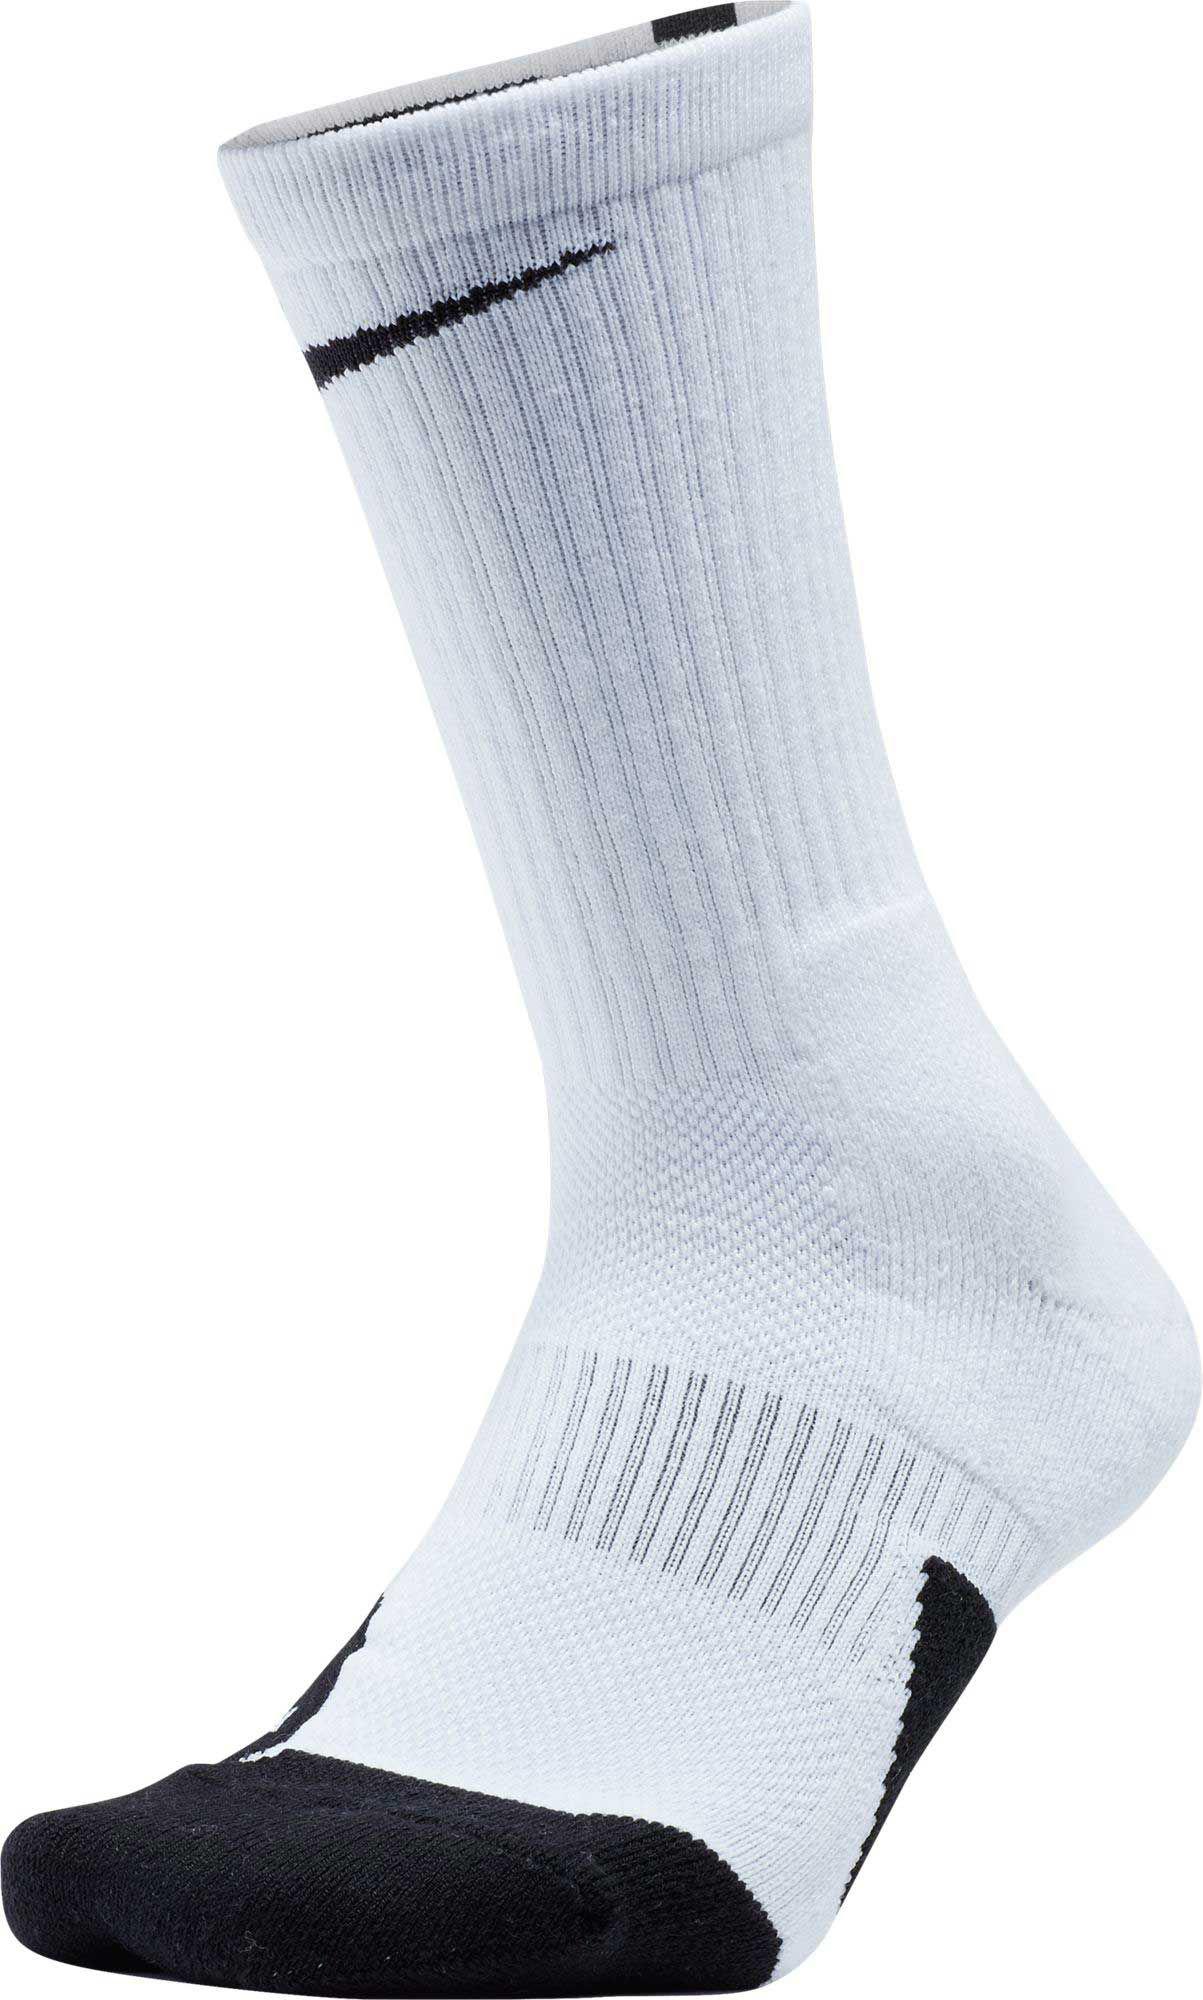 Nike Synthetic Dry Elite 1.5 Crew Basketball Socks in White/Black/Black ...